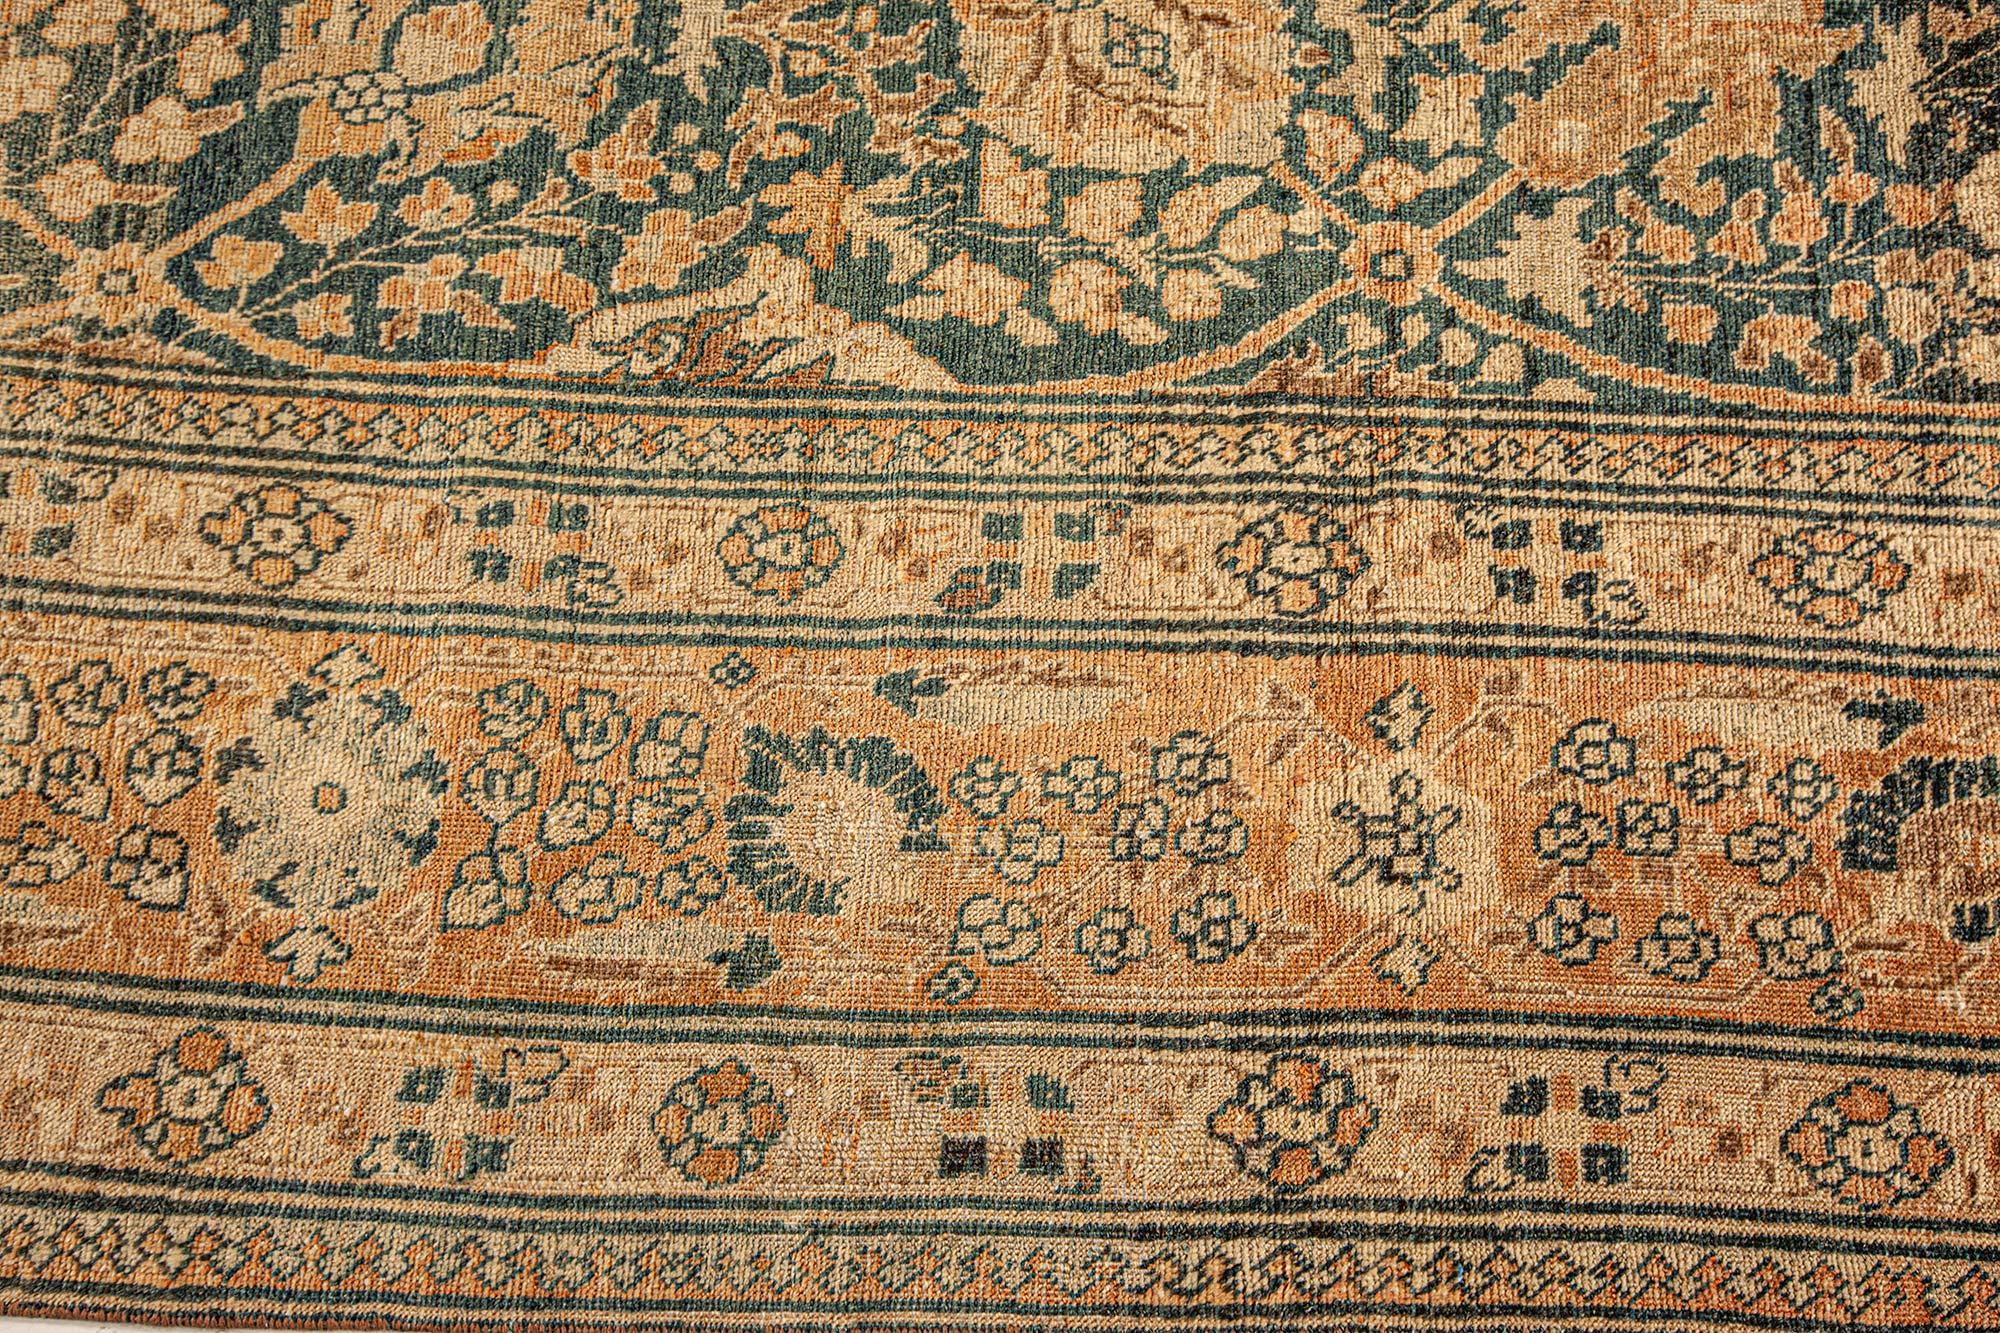 Antique Persian Tabriz handmade wool rug
Size: 9'6